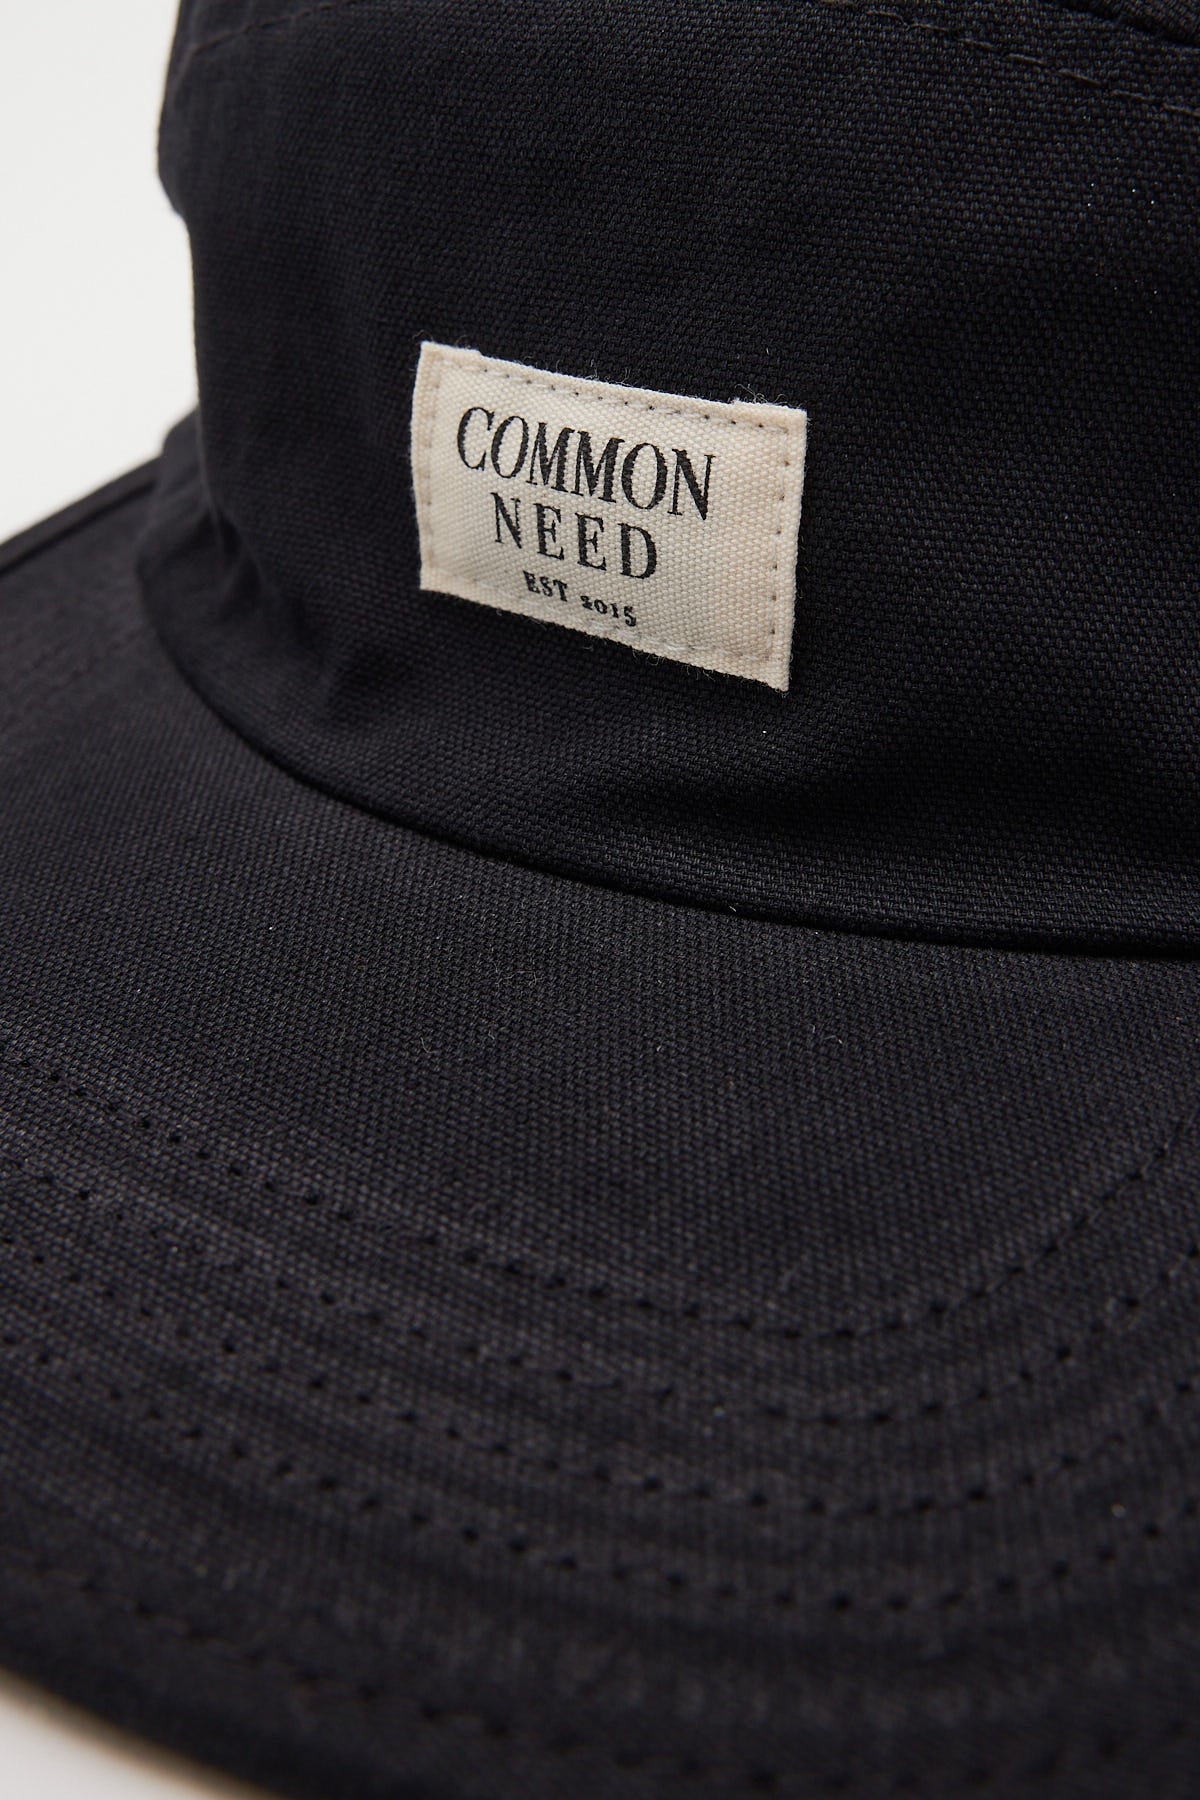 Common Need Canvas 5 Panel Camp Cap Black – Universal Store